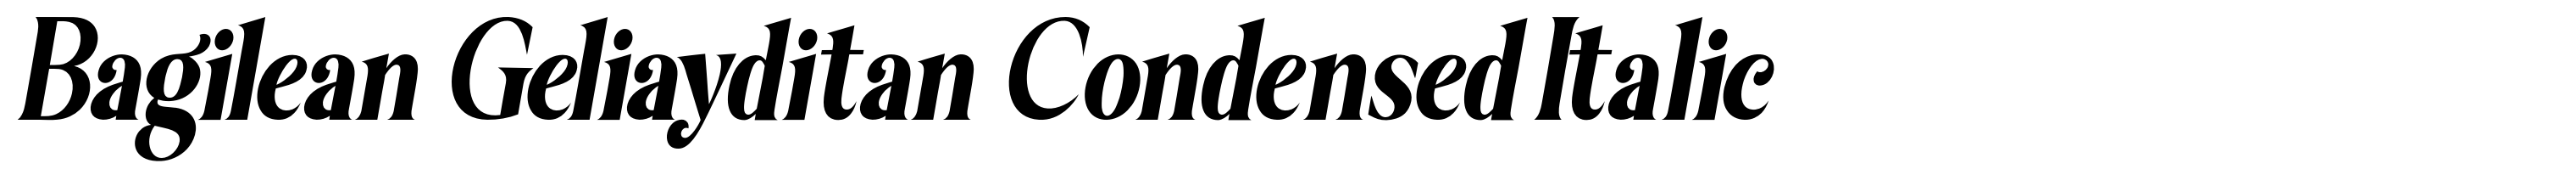 Bagilean Geliayditan Condensed Italic